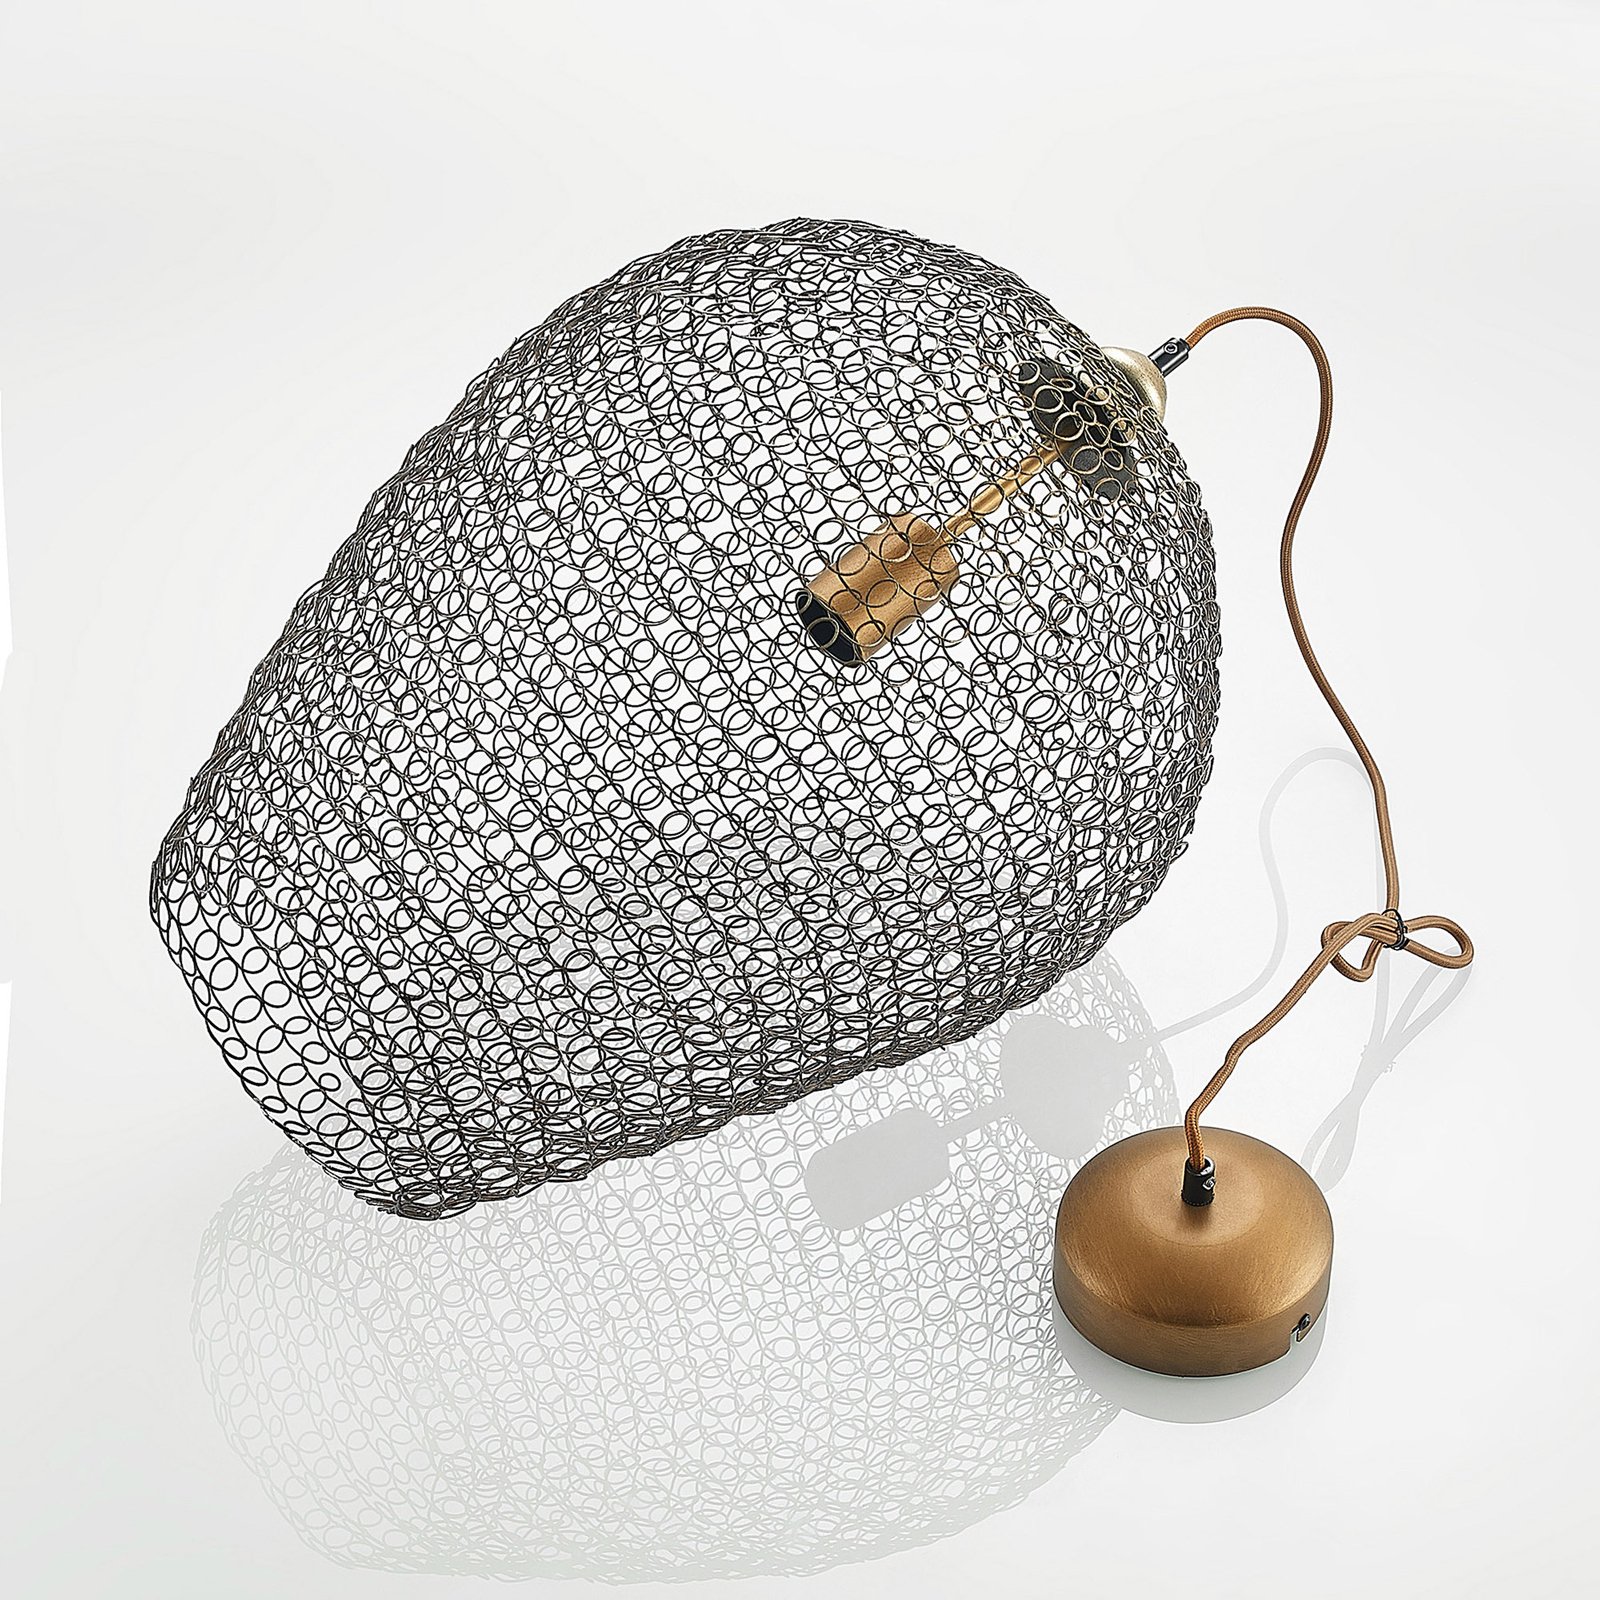 Lindby Benja pendant lamp, one-bulb, brass